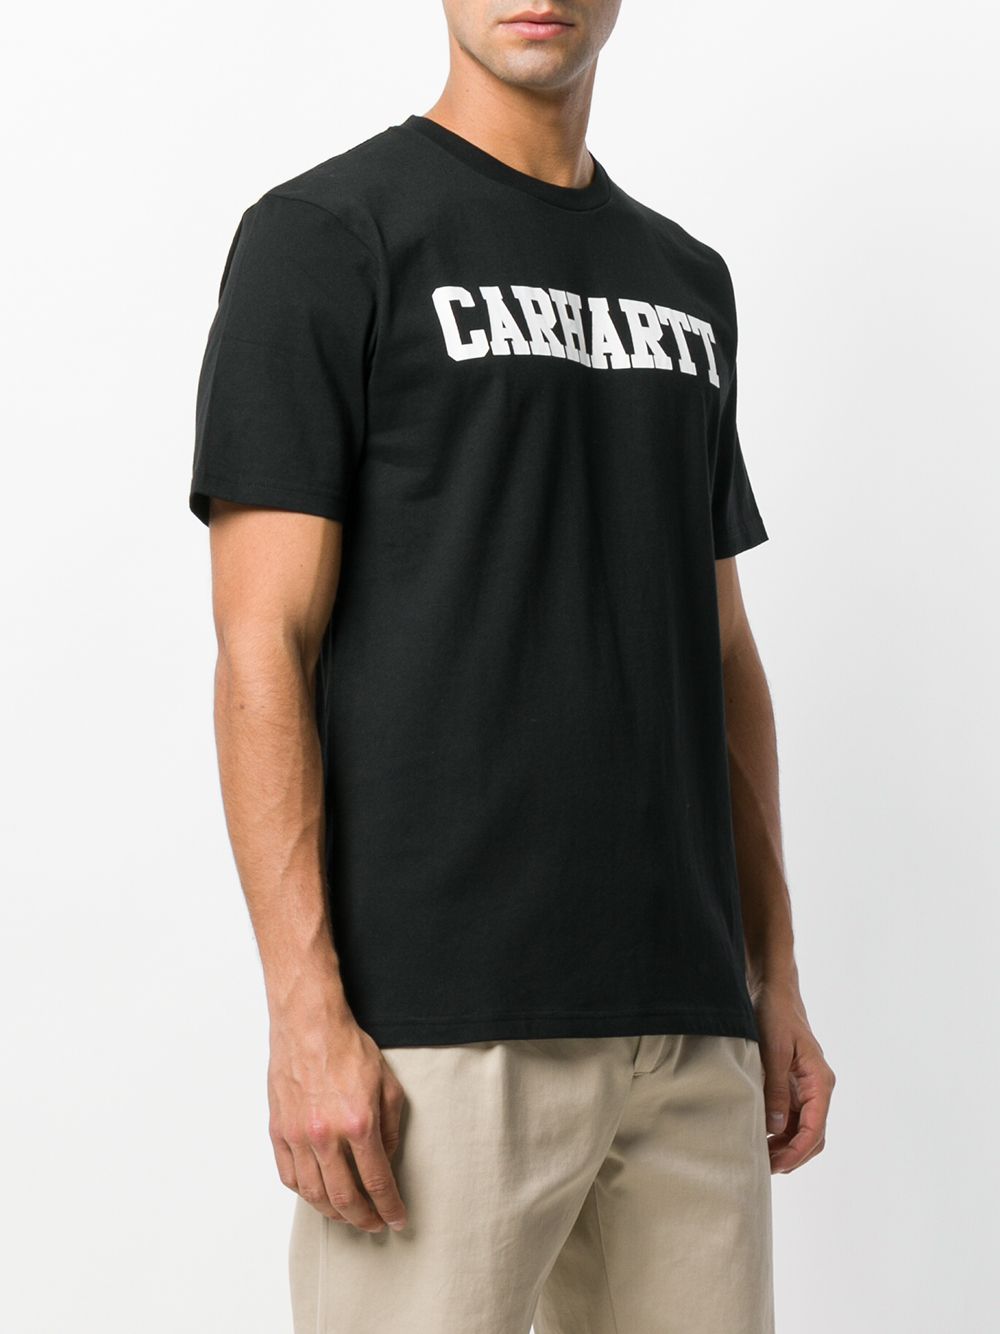 фото Carhartt футболка с принтом логотипа